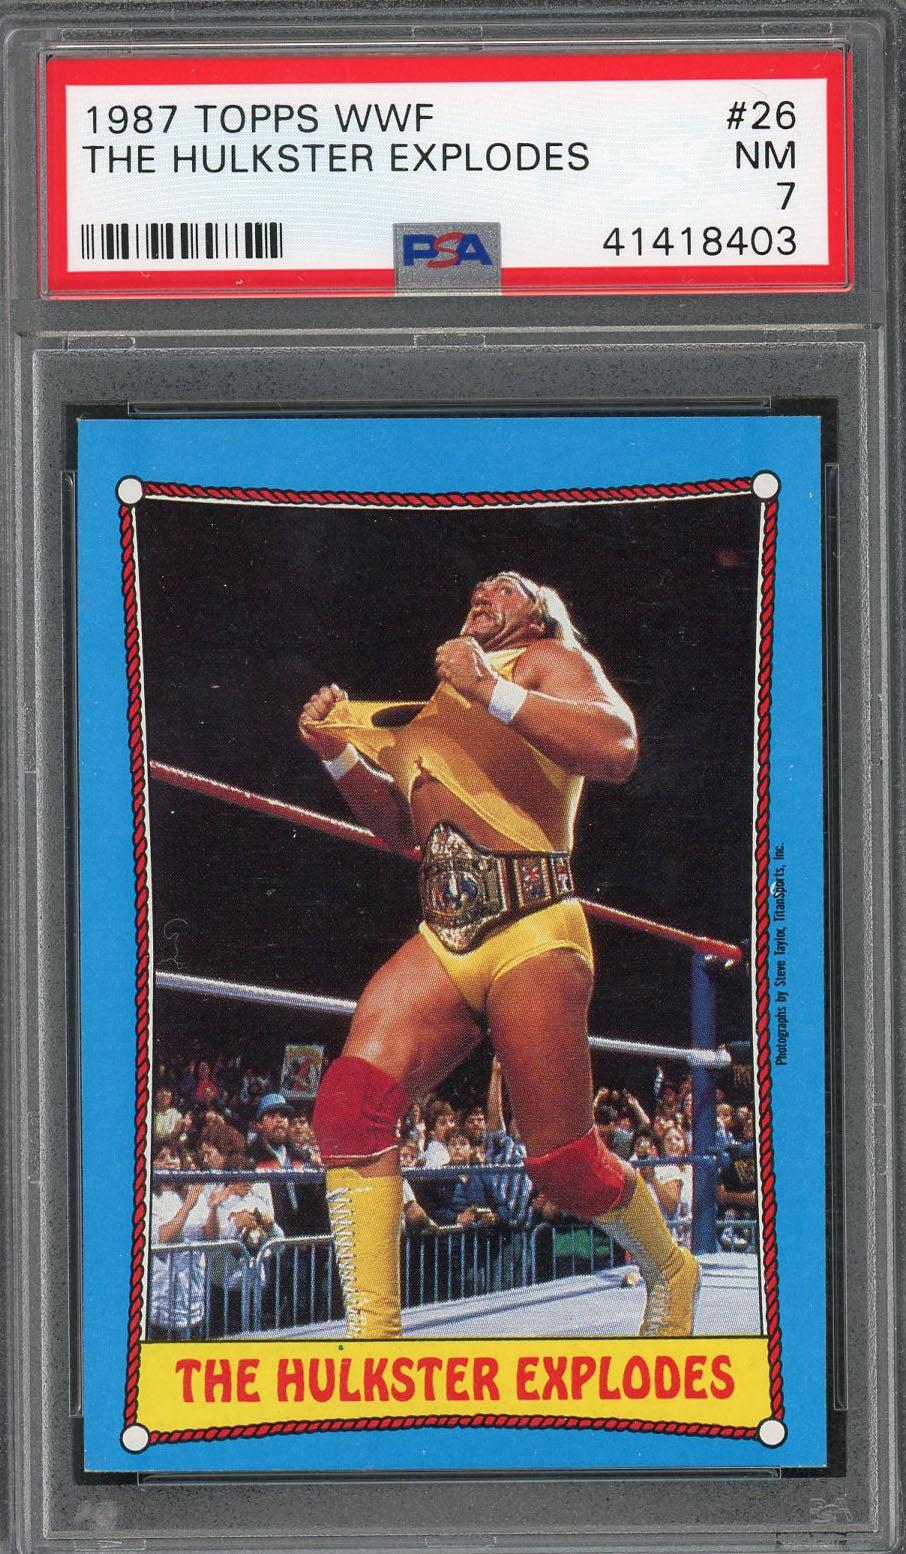 Hulk Hogan The Hulkster Explodes 1987 Topps WWF Wrestling Card #26 Graded PSA 7-Powers Sports Memorabilia